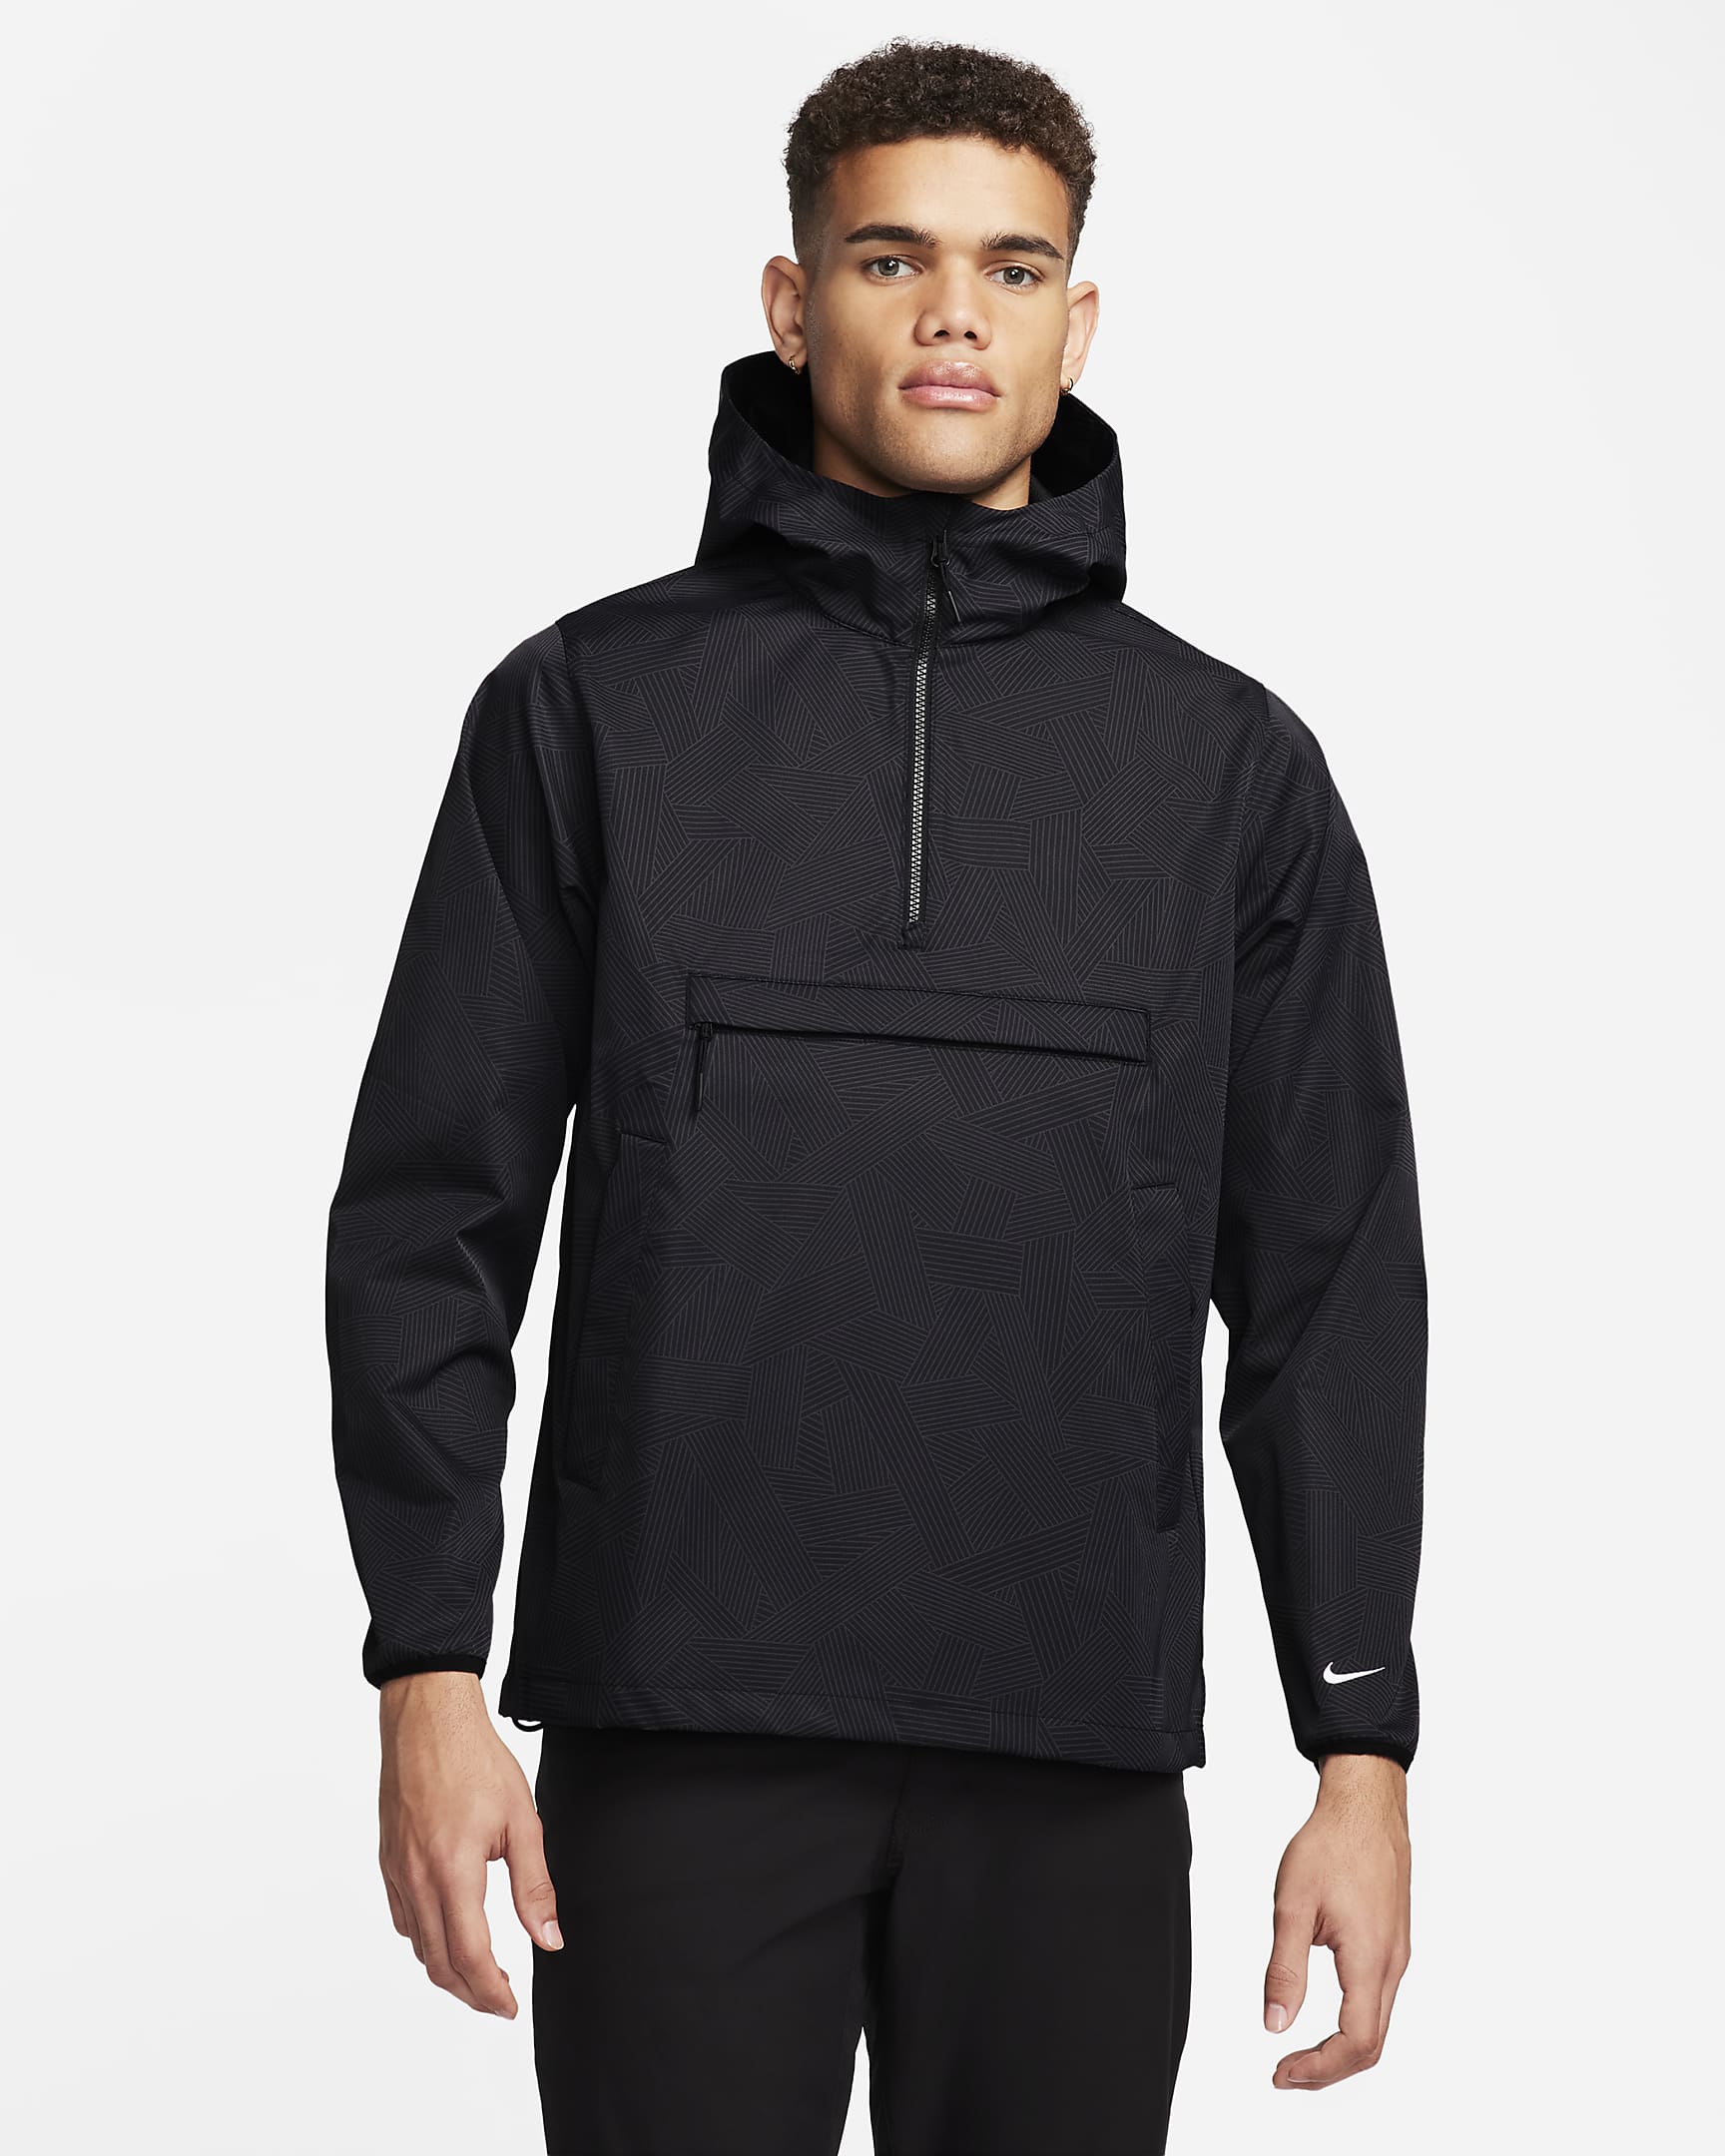 Nike Unscripted Repel Men's Golf Anorak Jacket. Nike NL